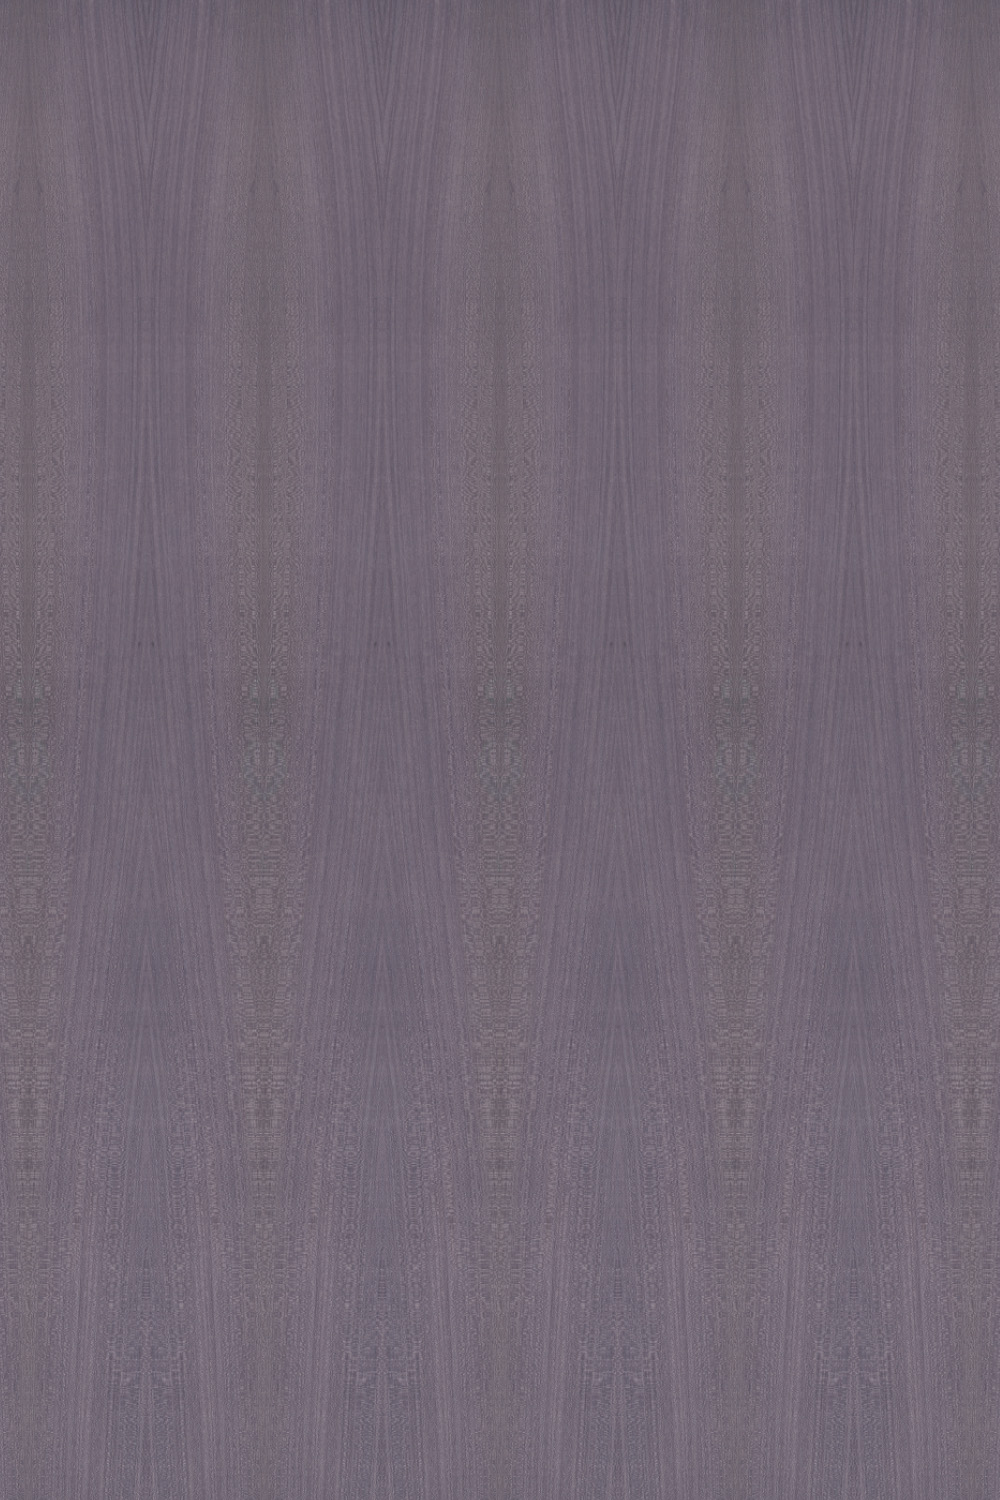 KOGP03（KOTO高光紫色03号色板）